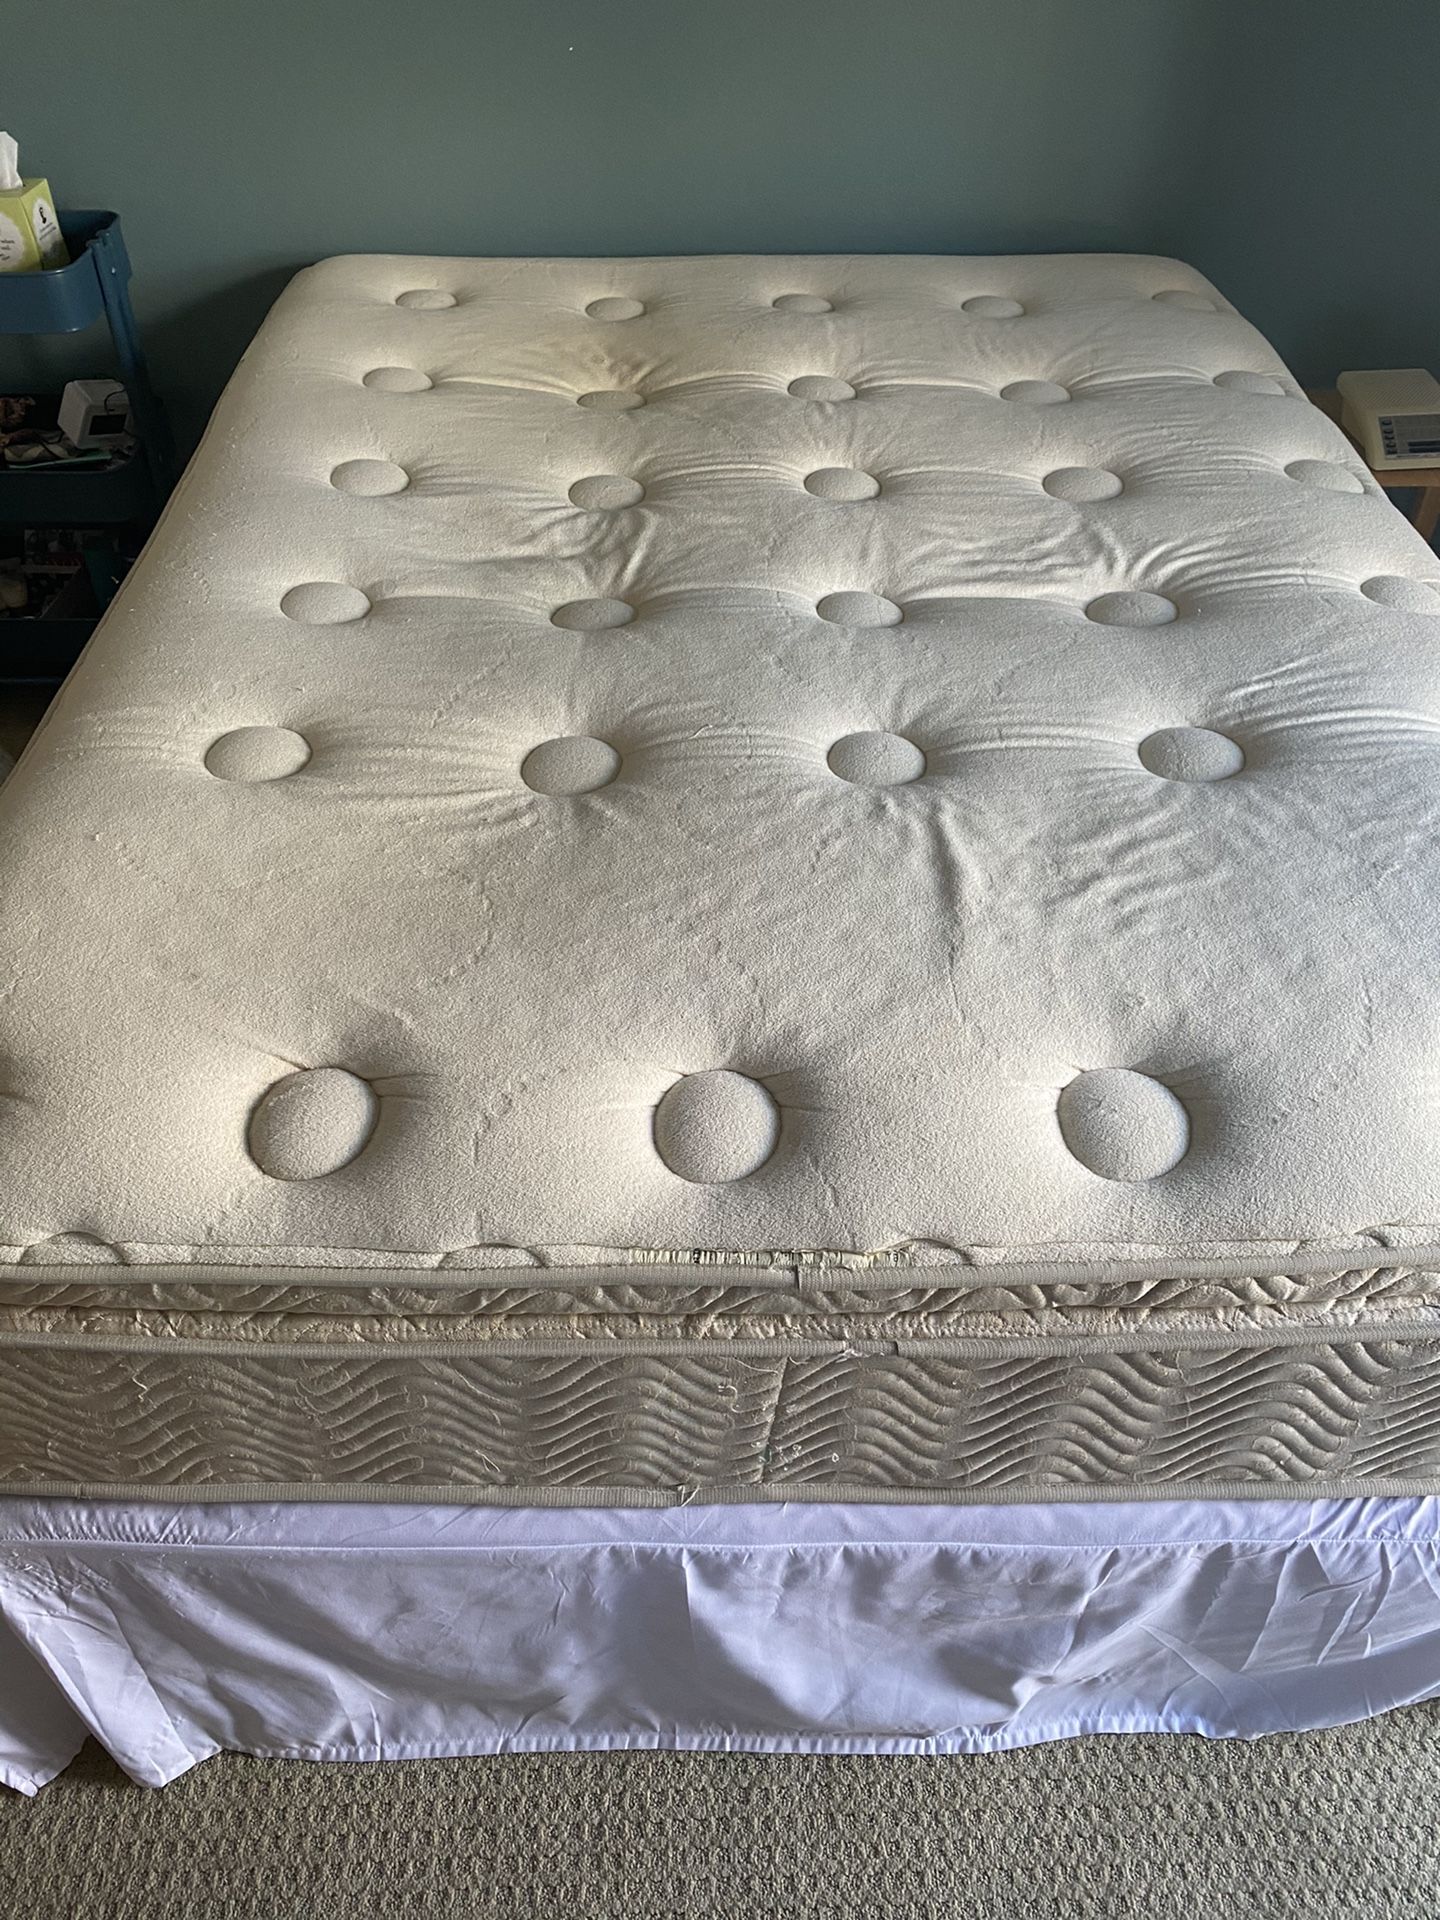 FREE Queen mattress, box and frame